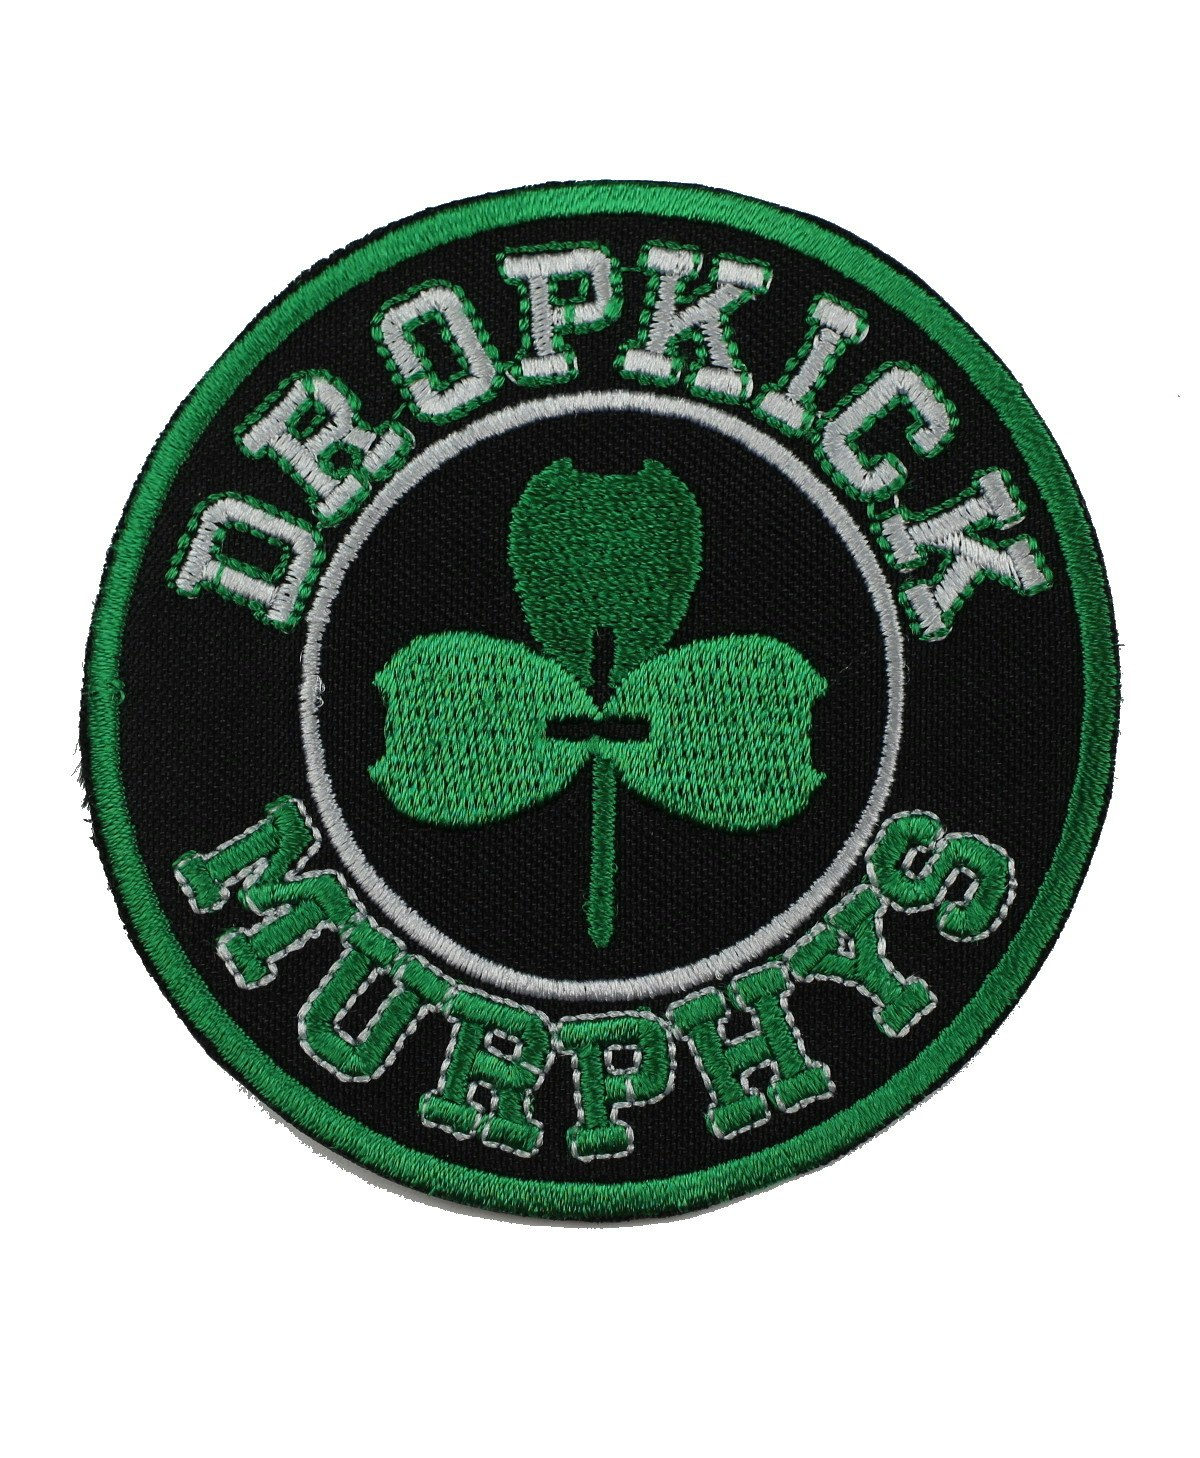 Dropkick murphys green logo patch